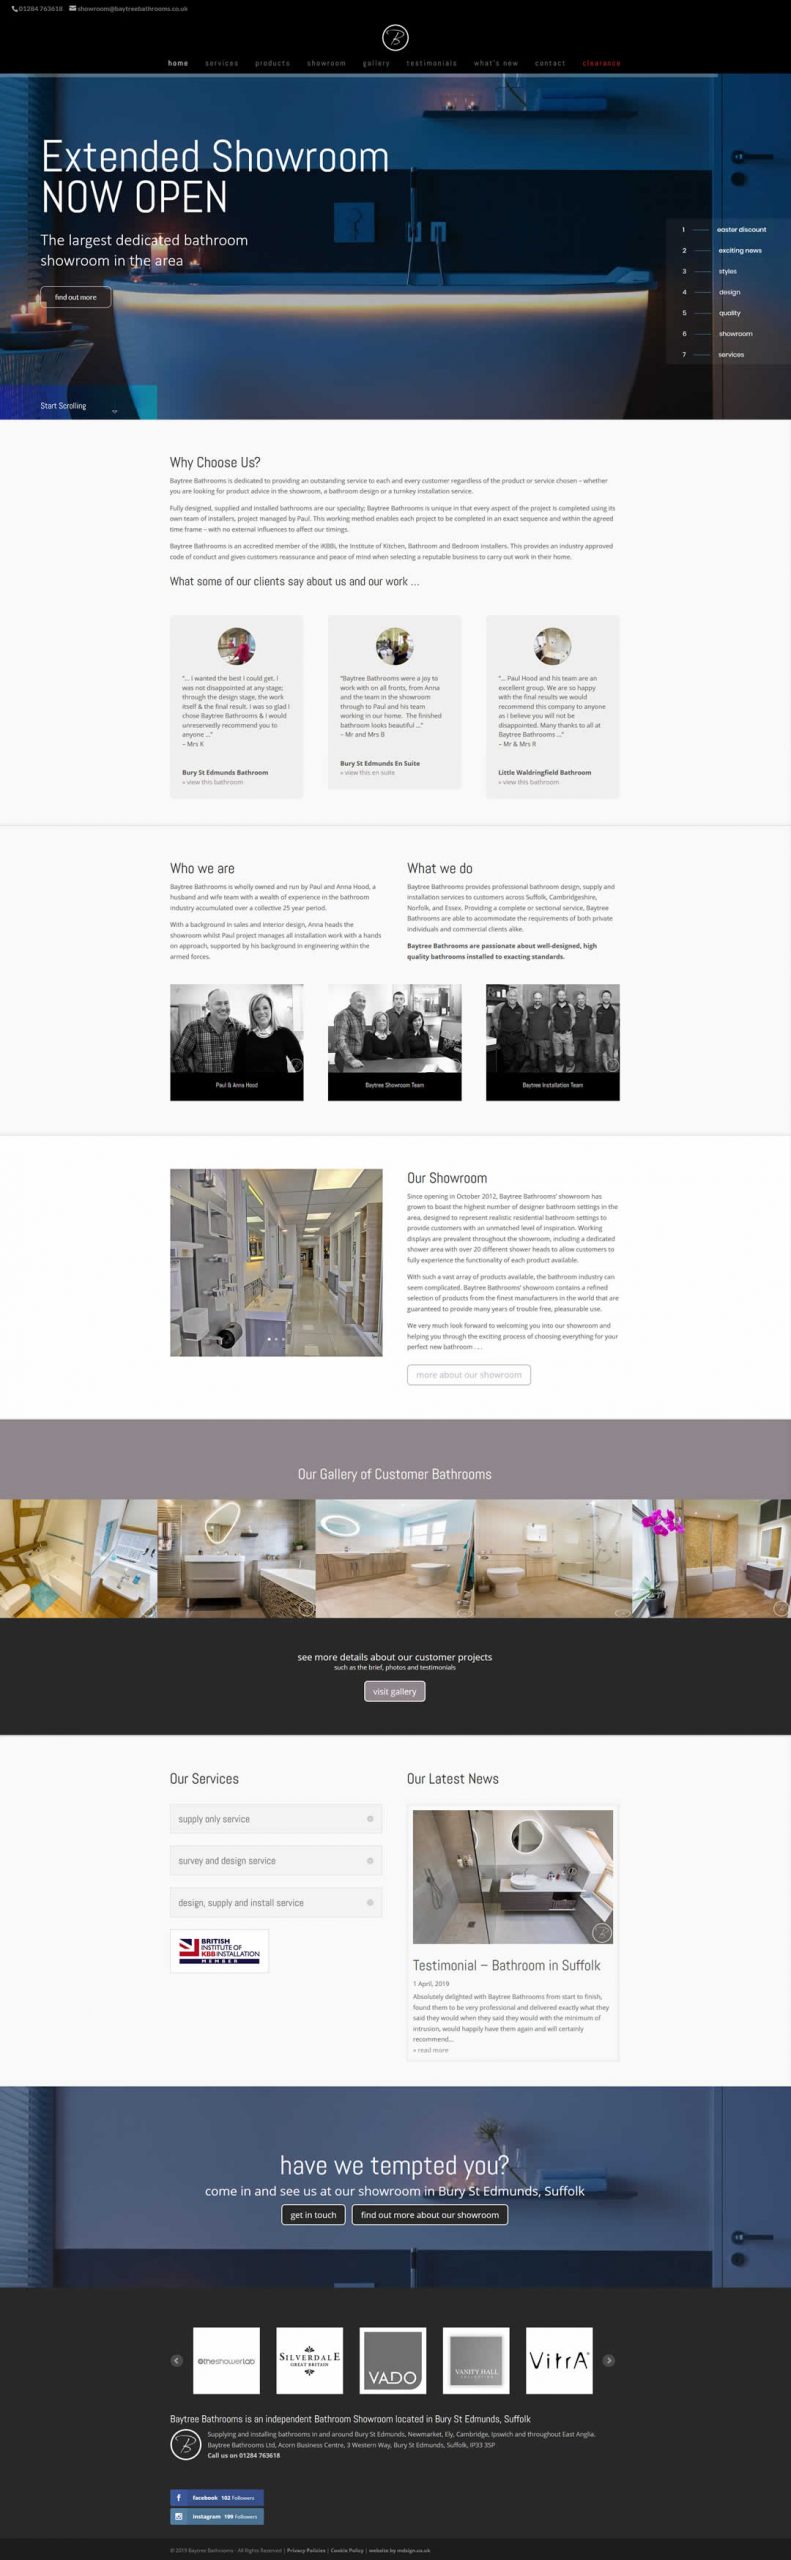 Baytree Bathrooms website design by mdsign